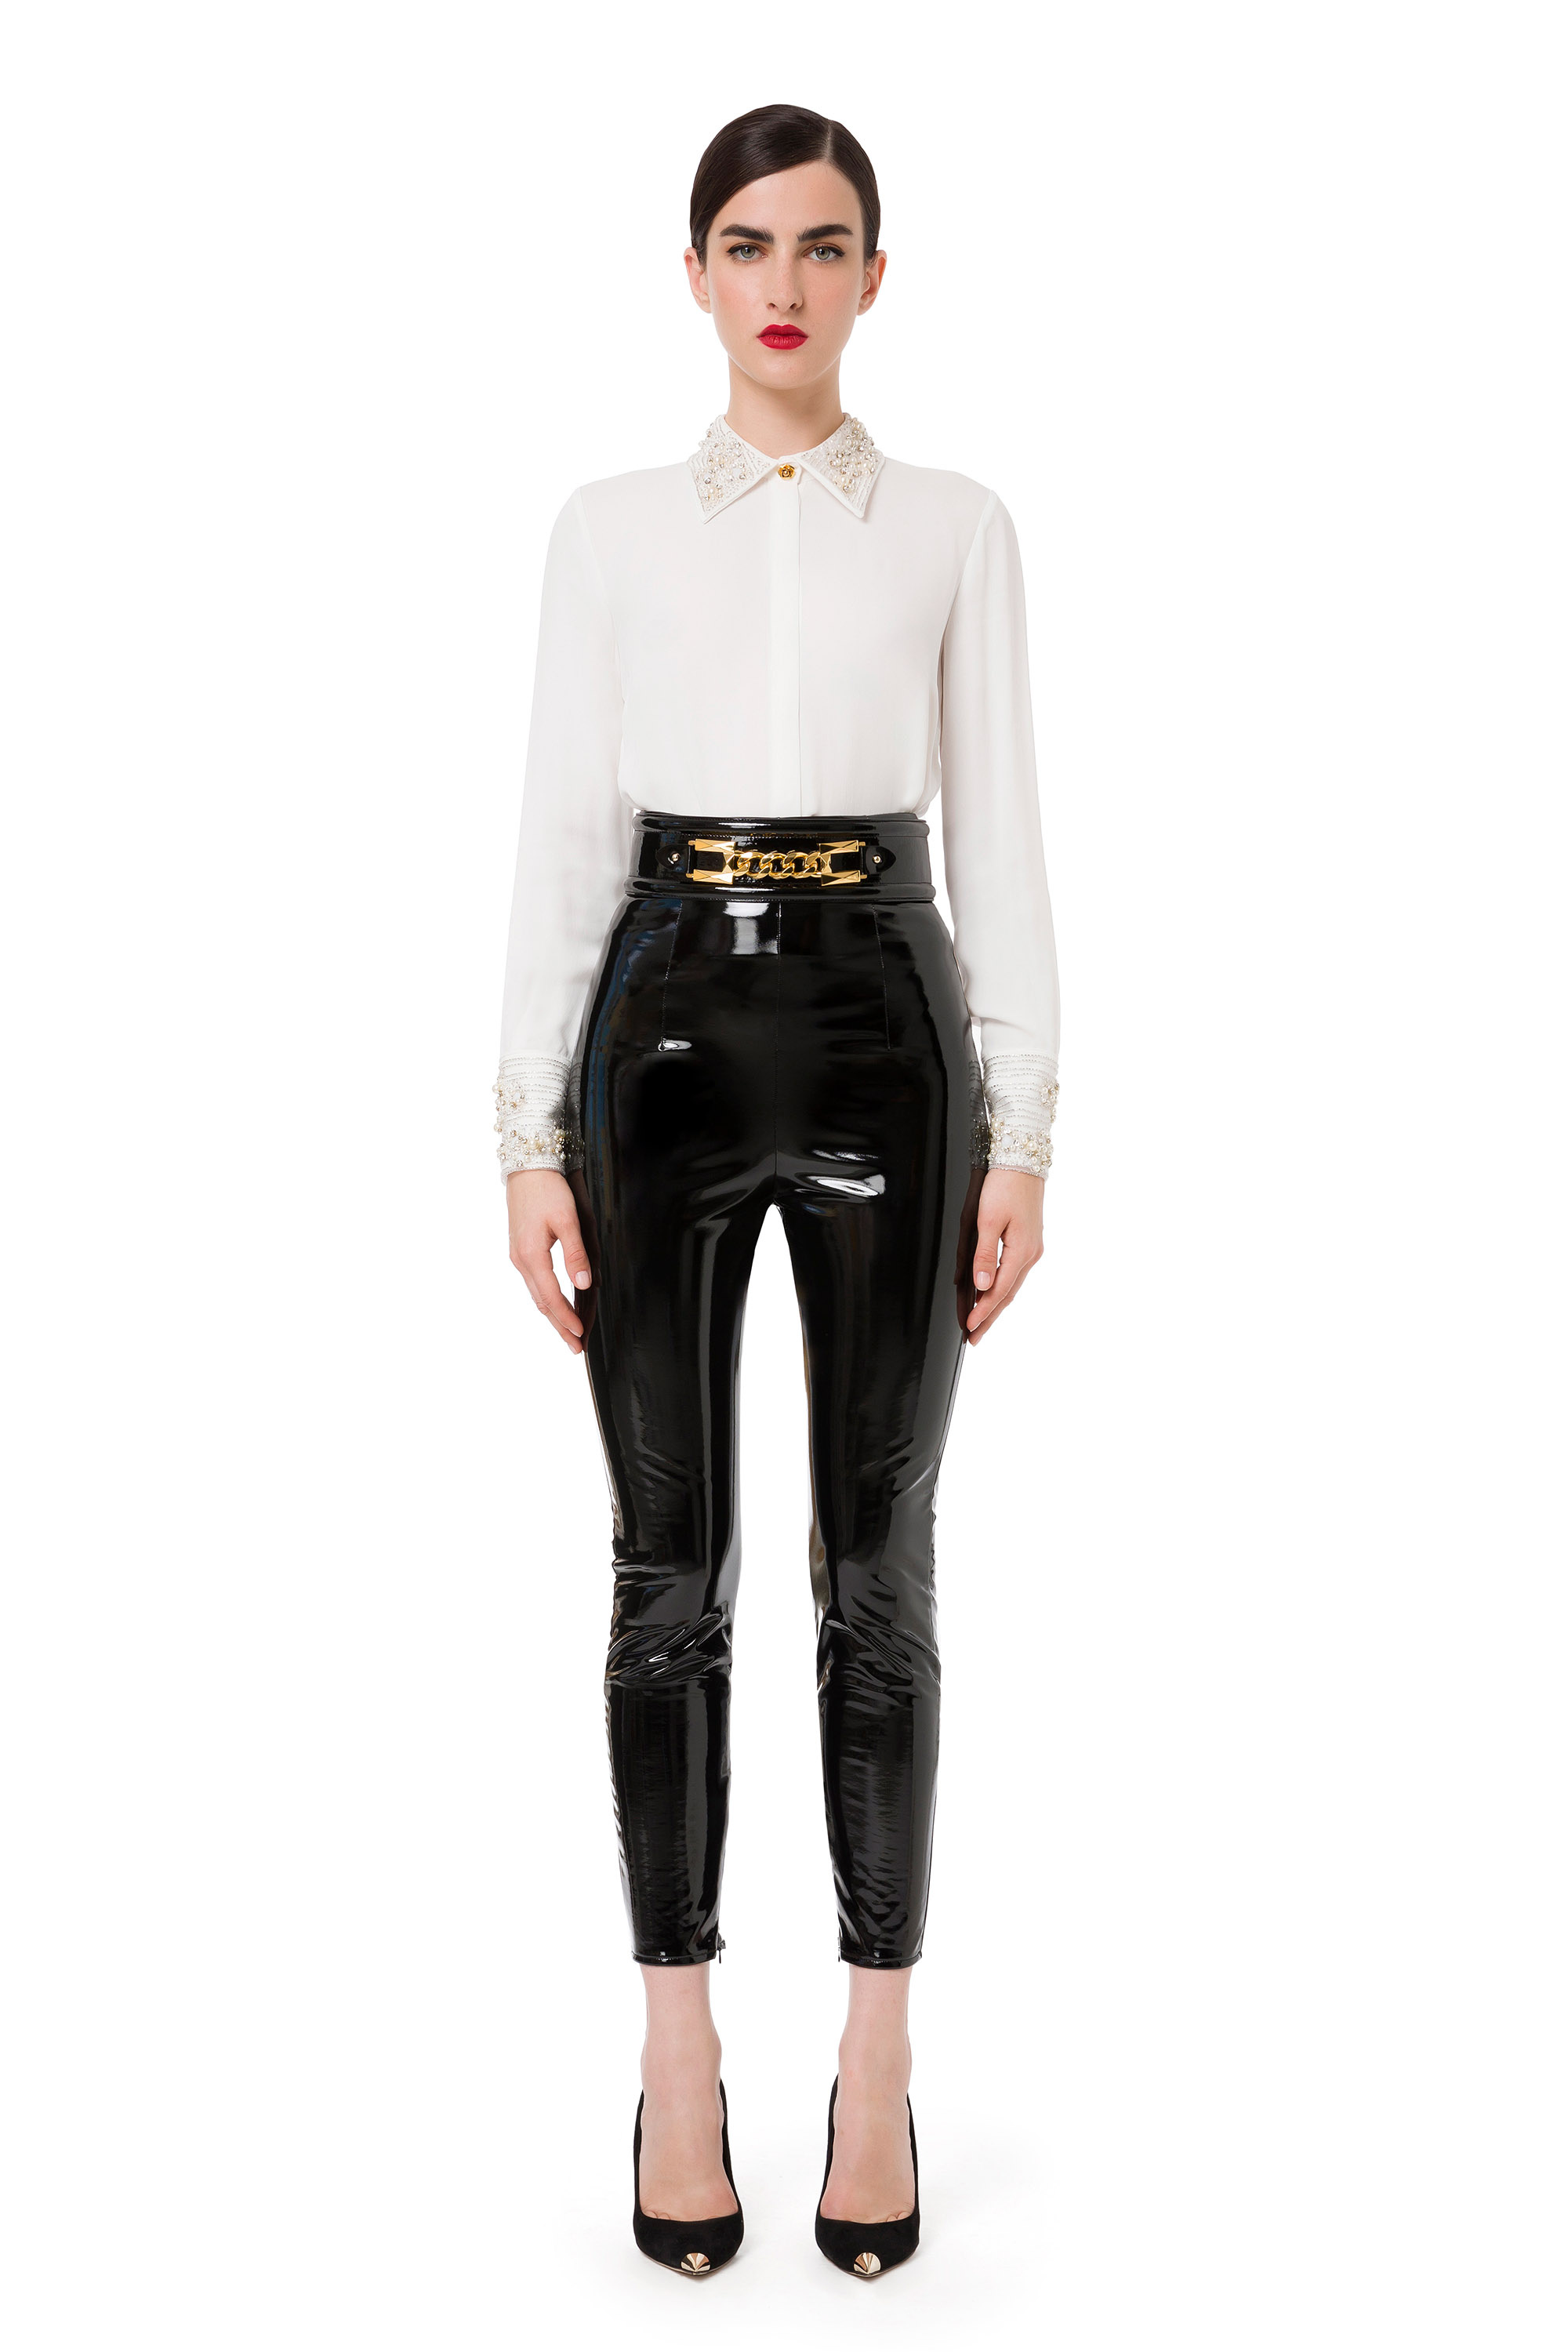 High-waist glossy patent leather leggings